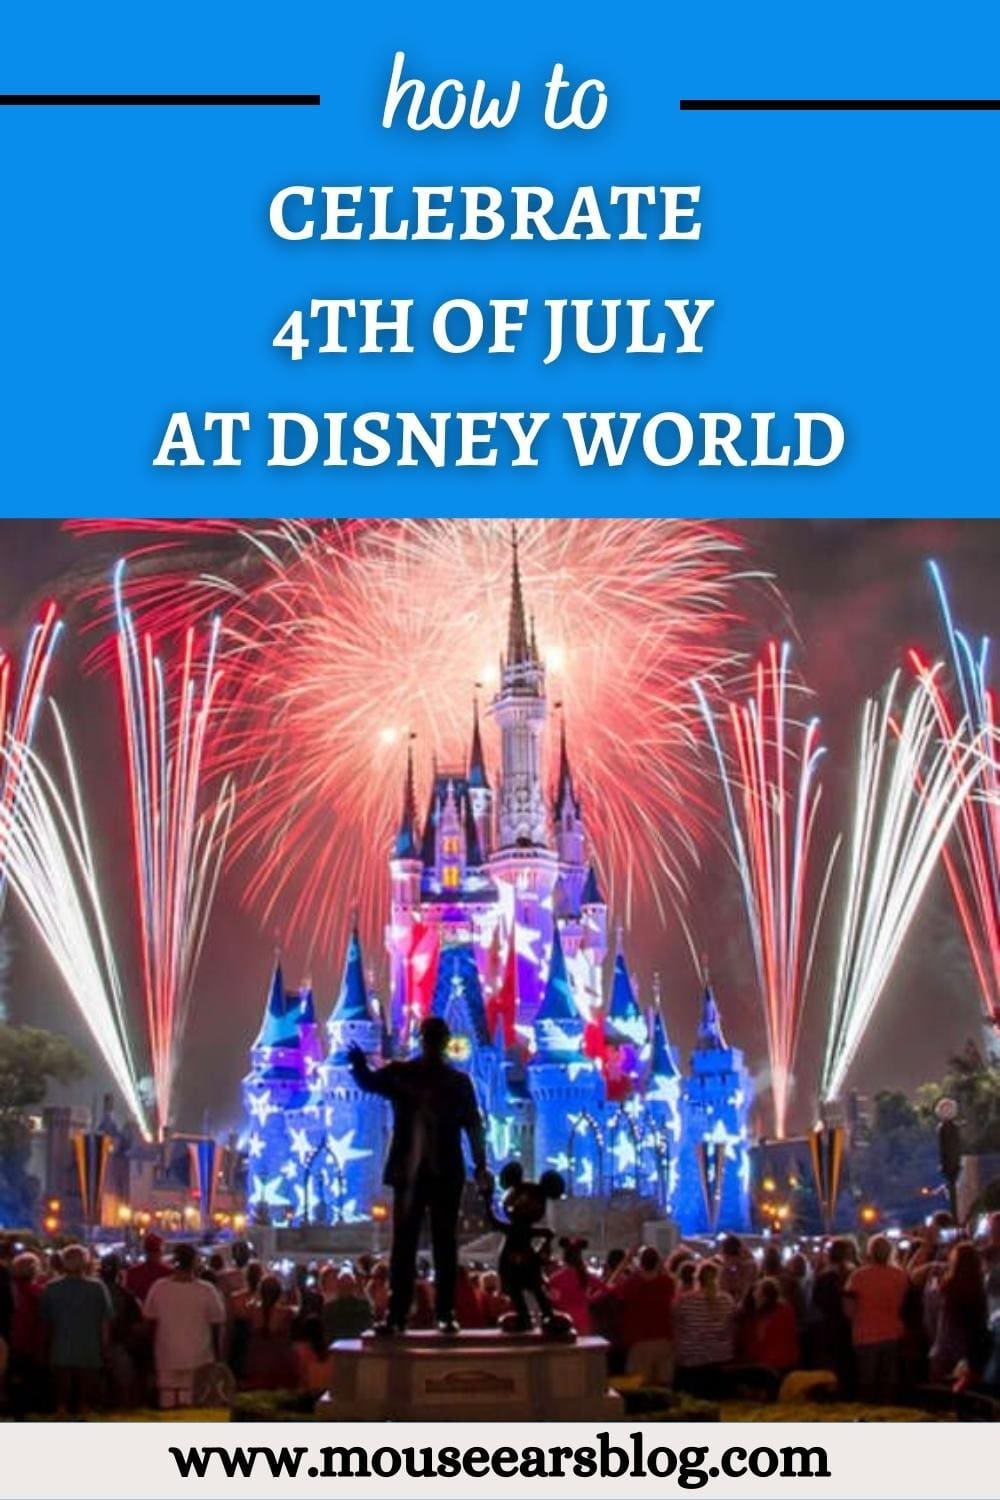 Celebrating the 4th of July at Walt Disney World